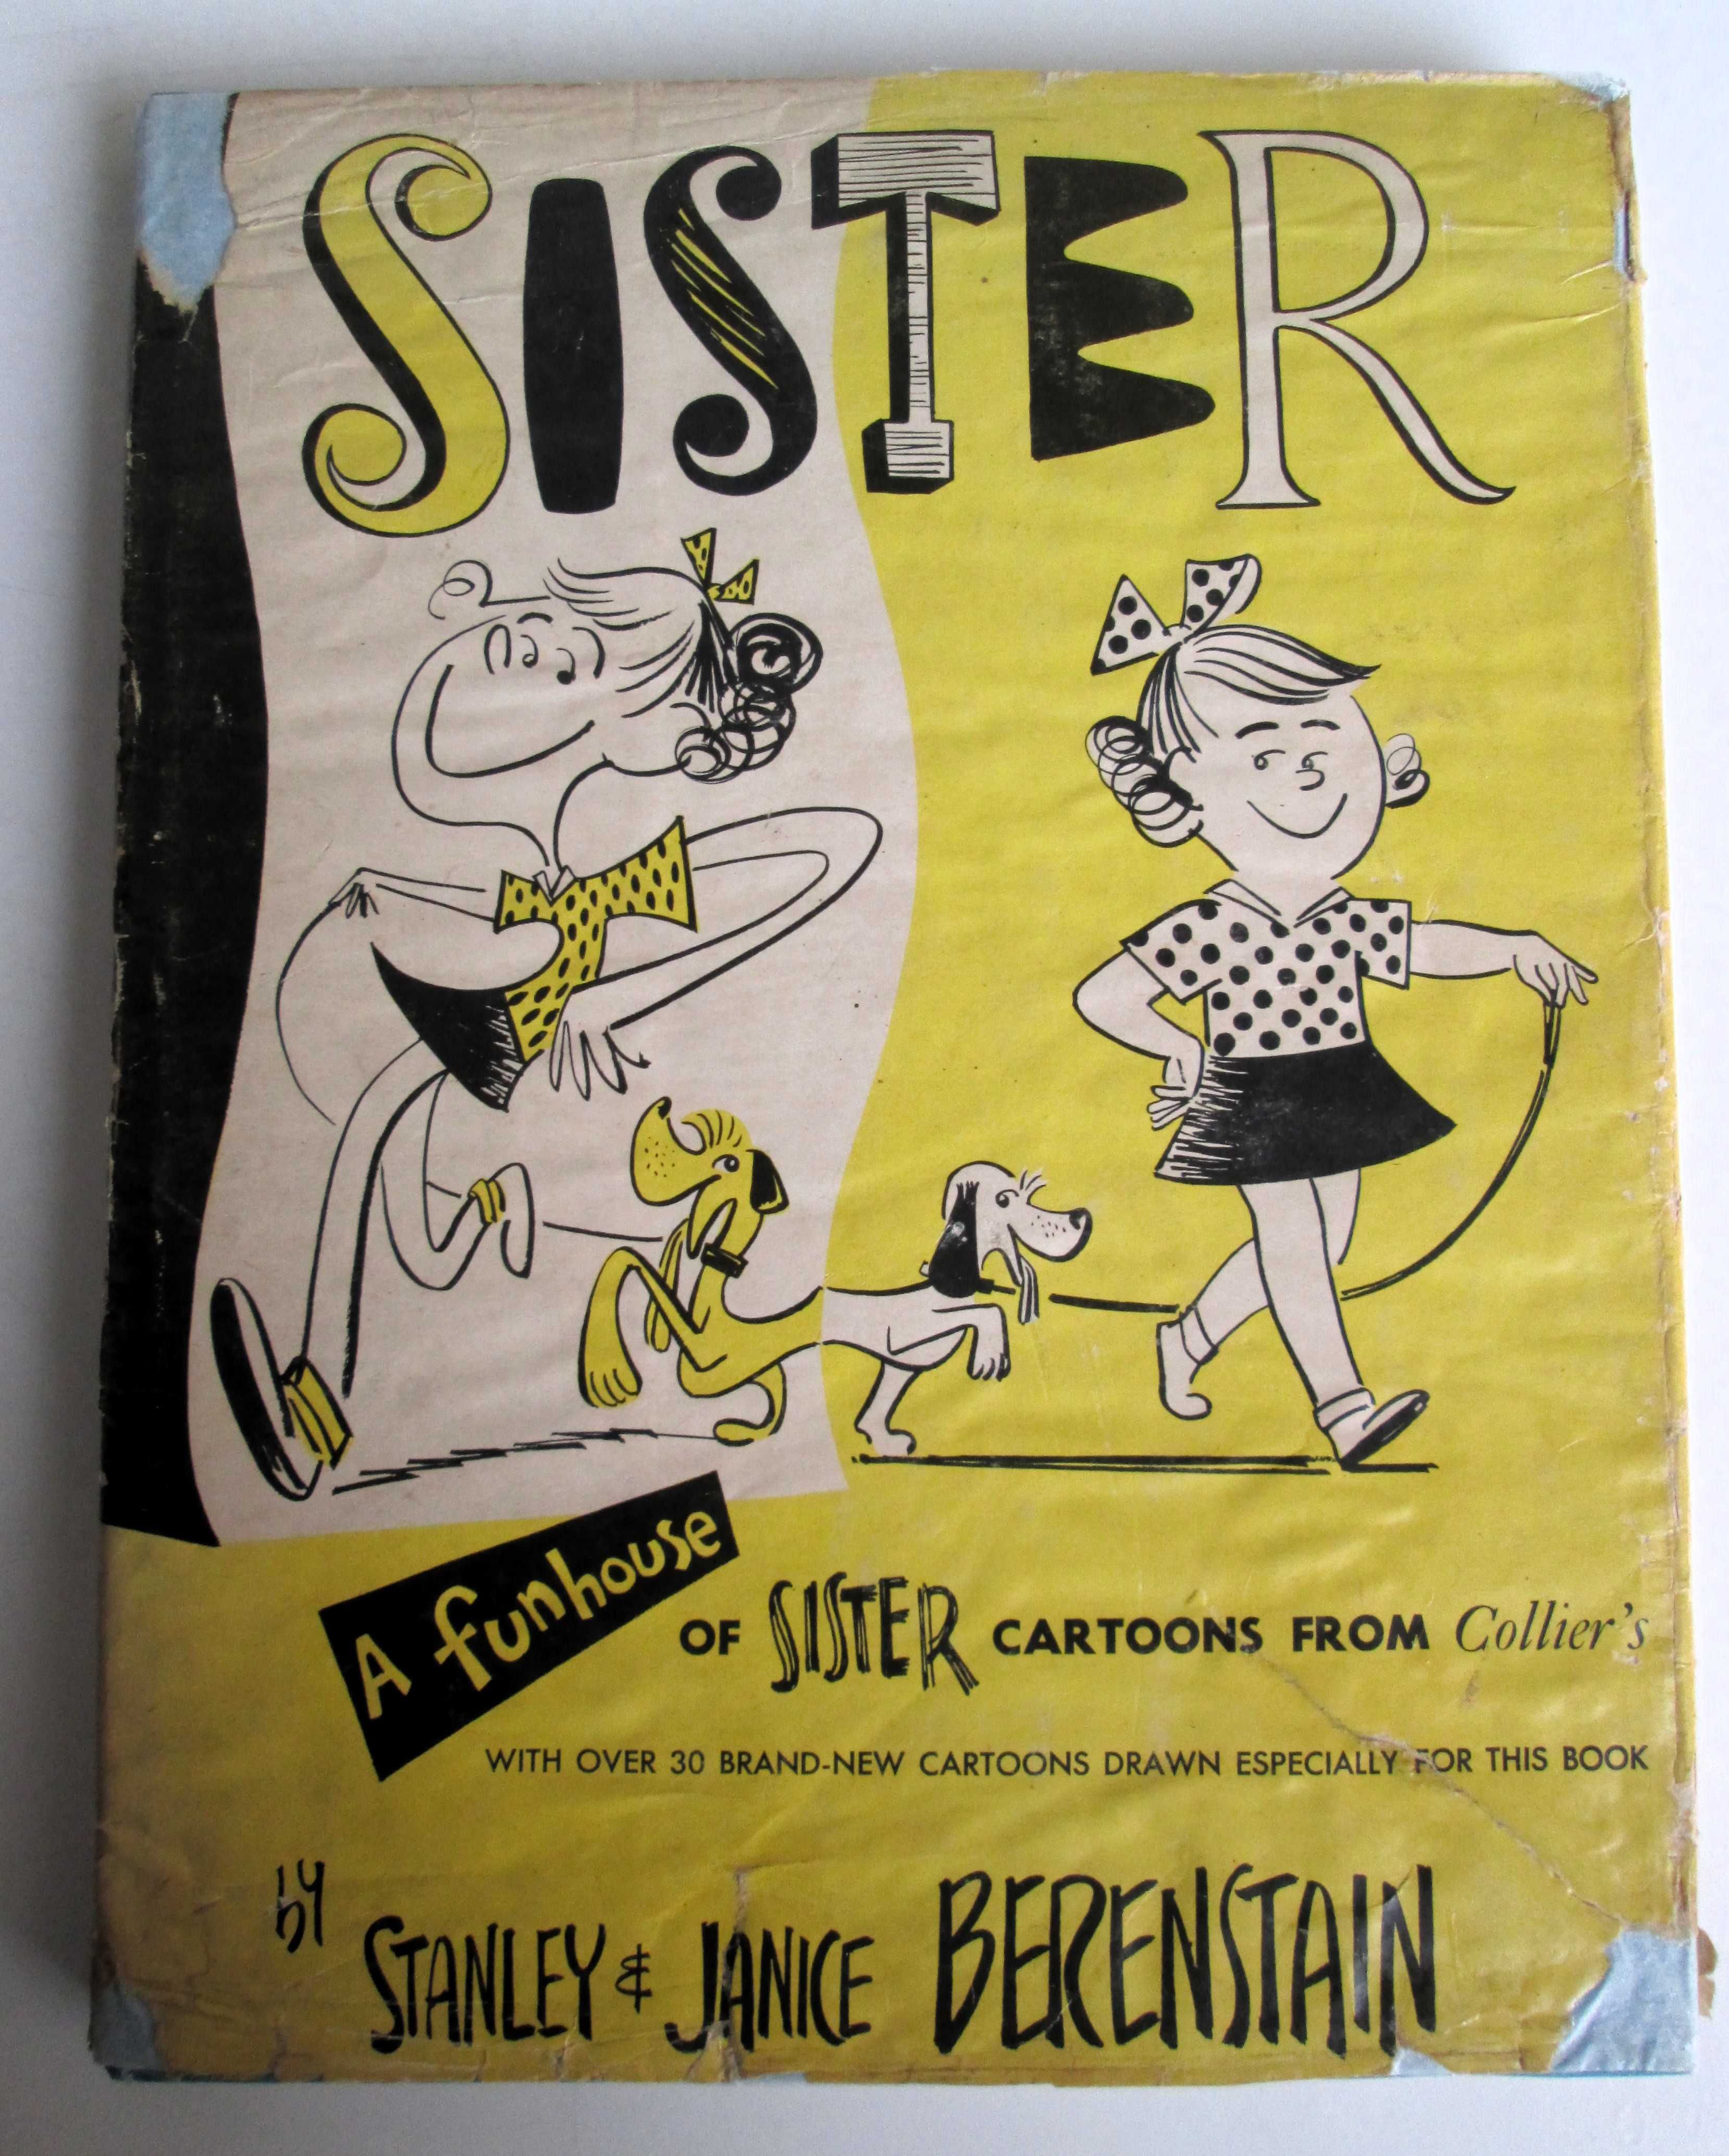 (1952) Sister Berenstain cartoons